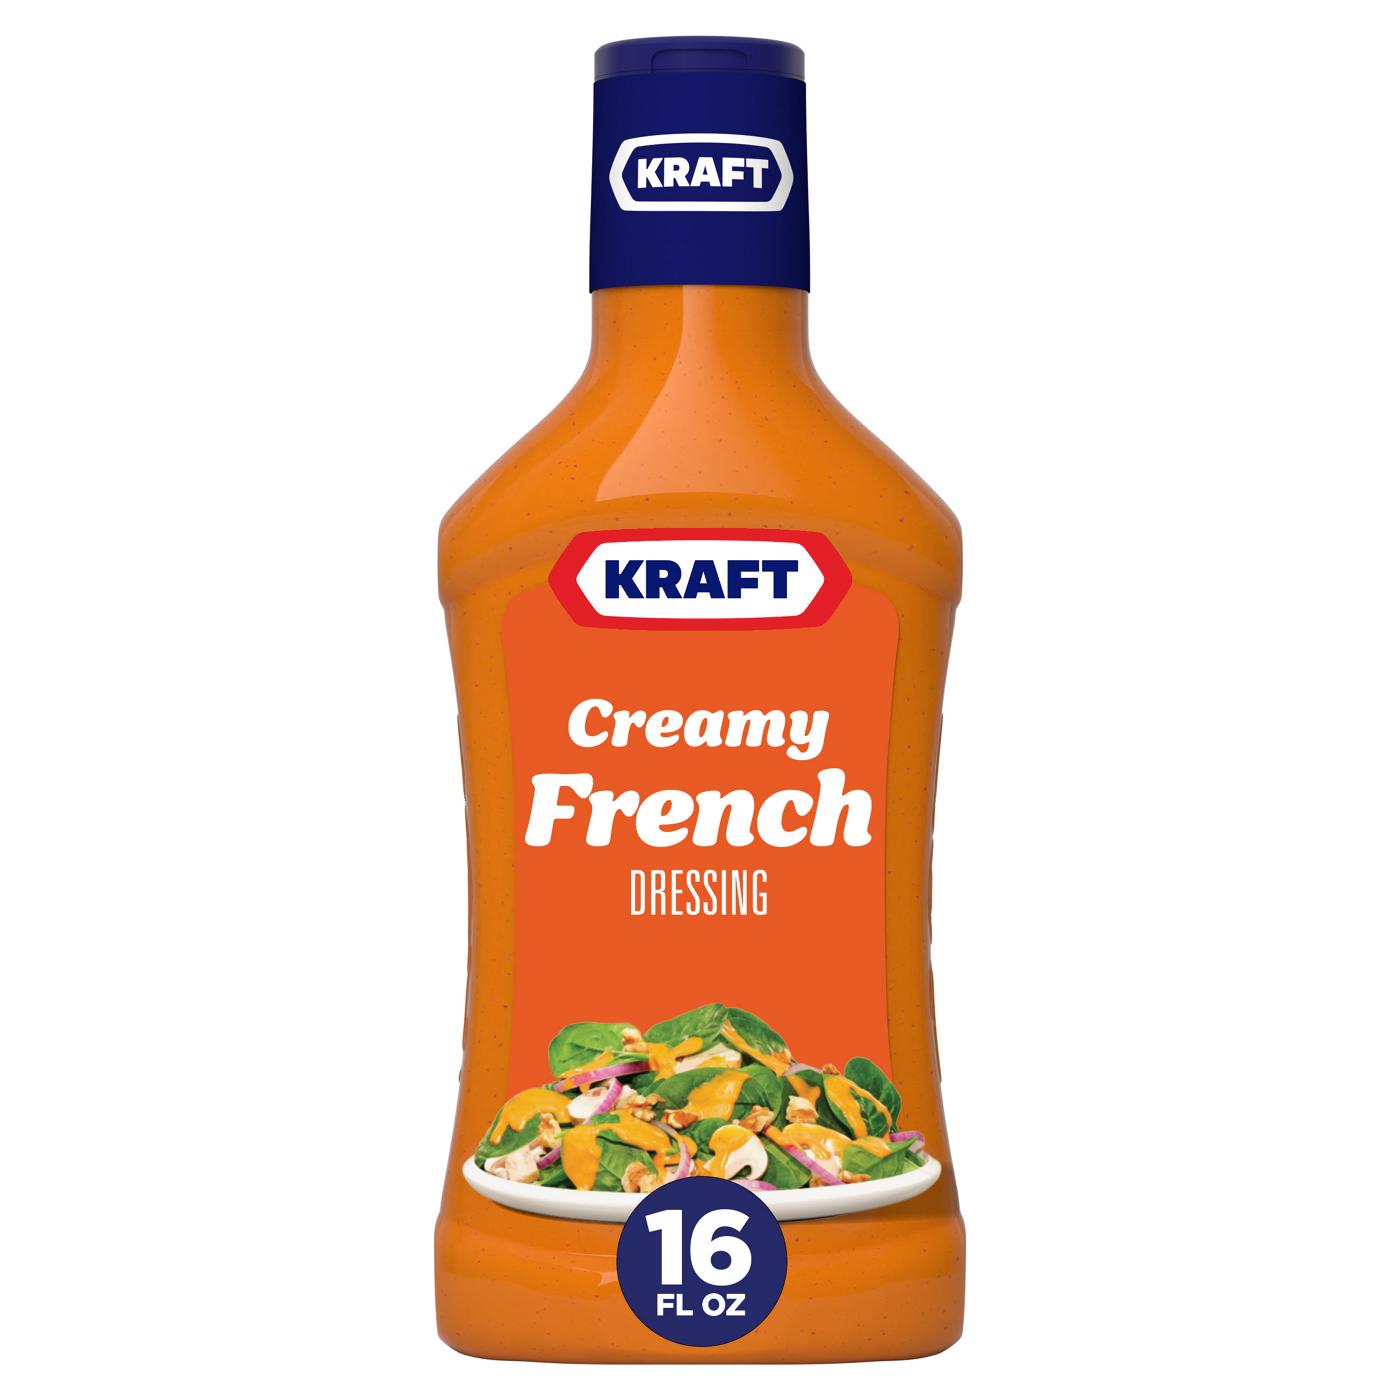 Kraft Creamy French Dressing; image 1 of 2